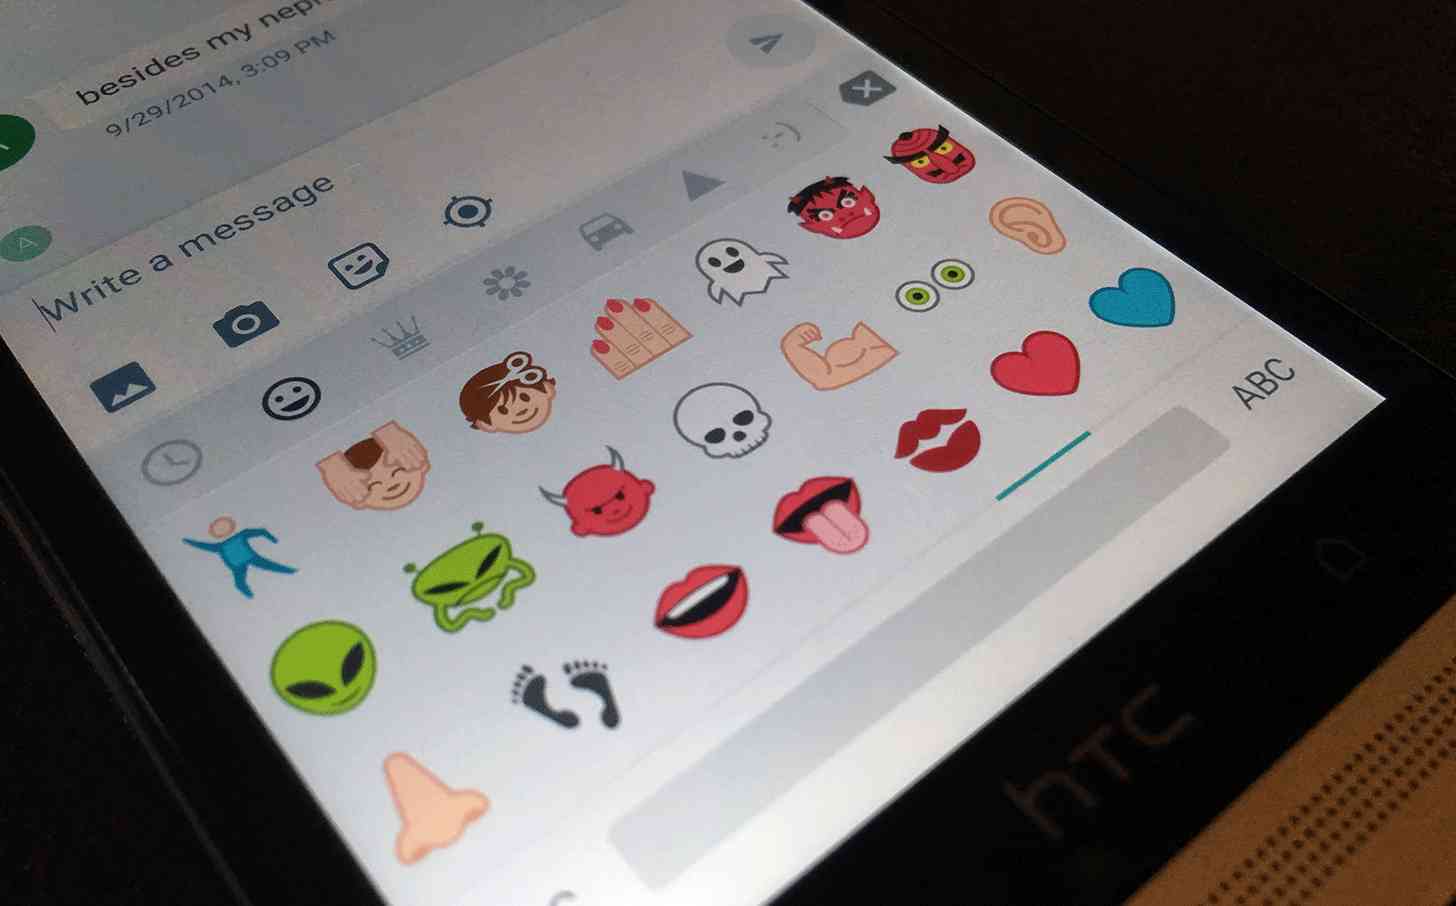 Android Emoji keyboard